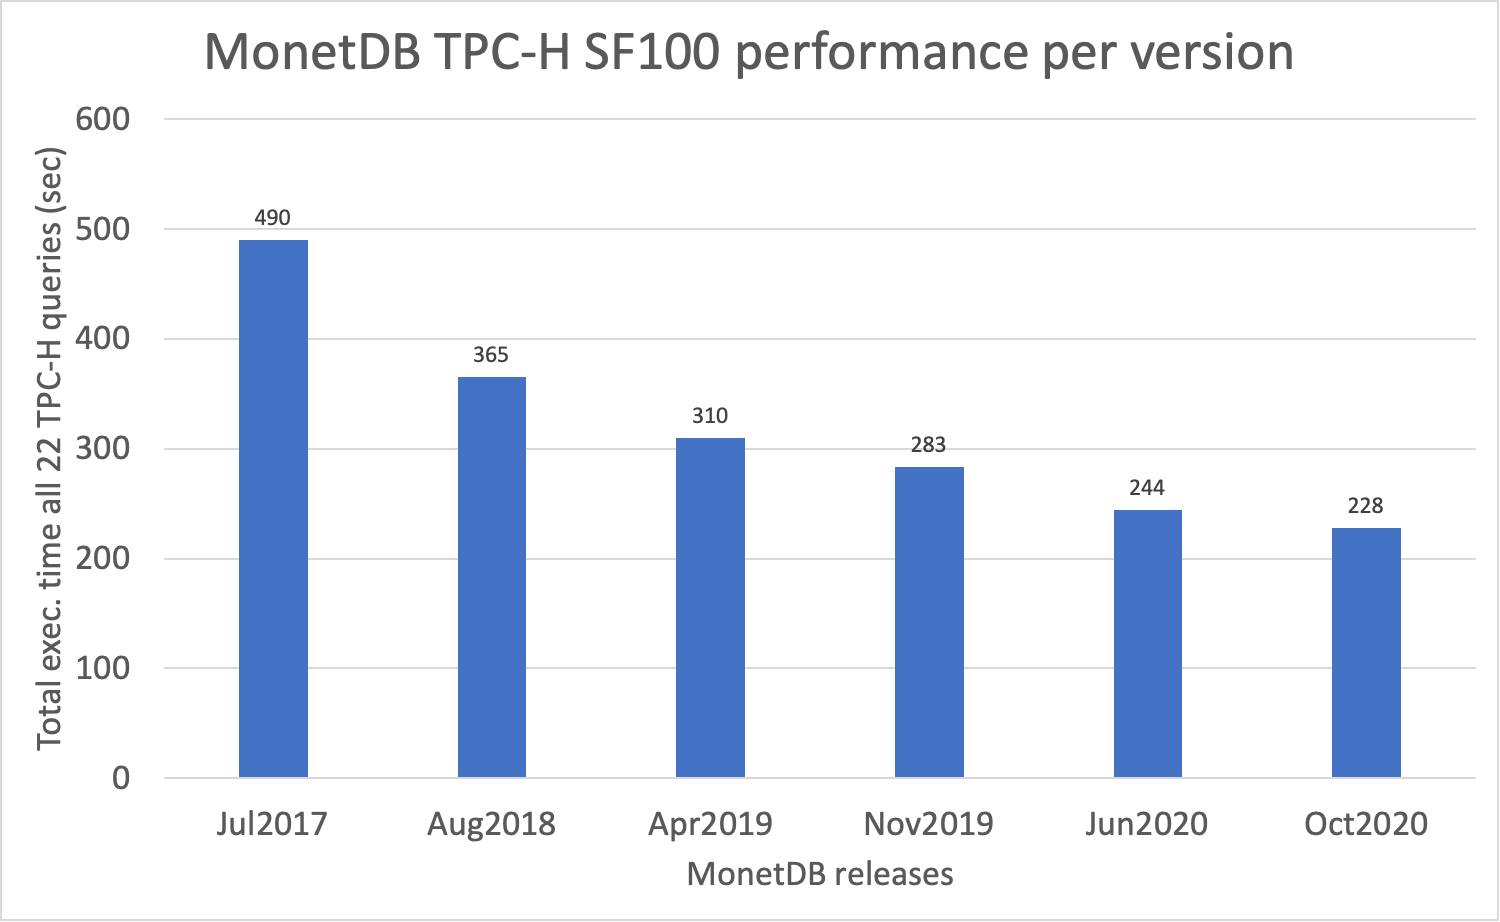 MonetDB TPC-H SF100 performance